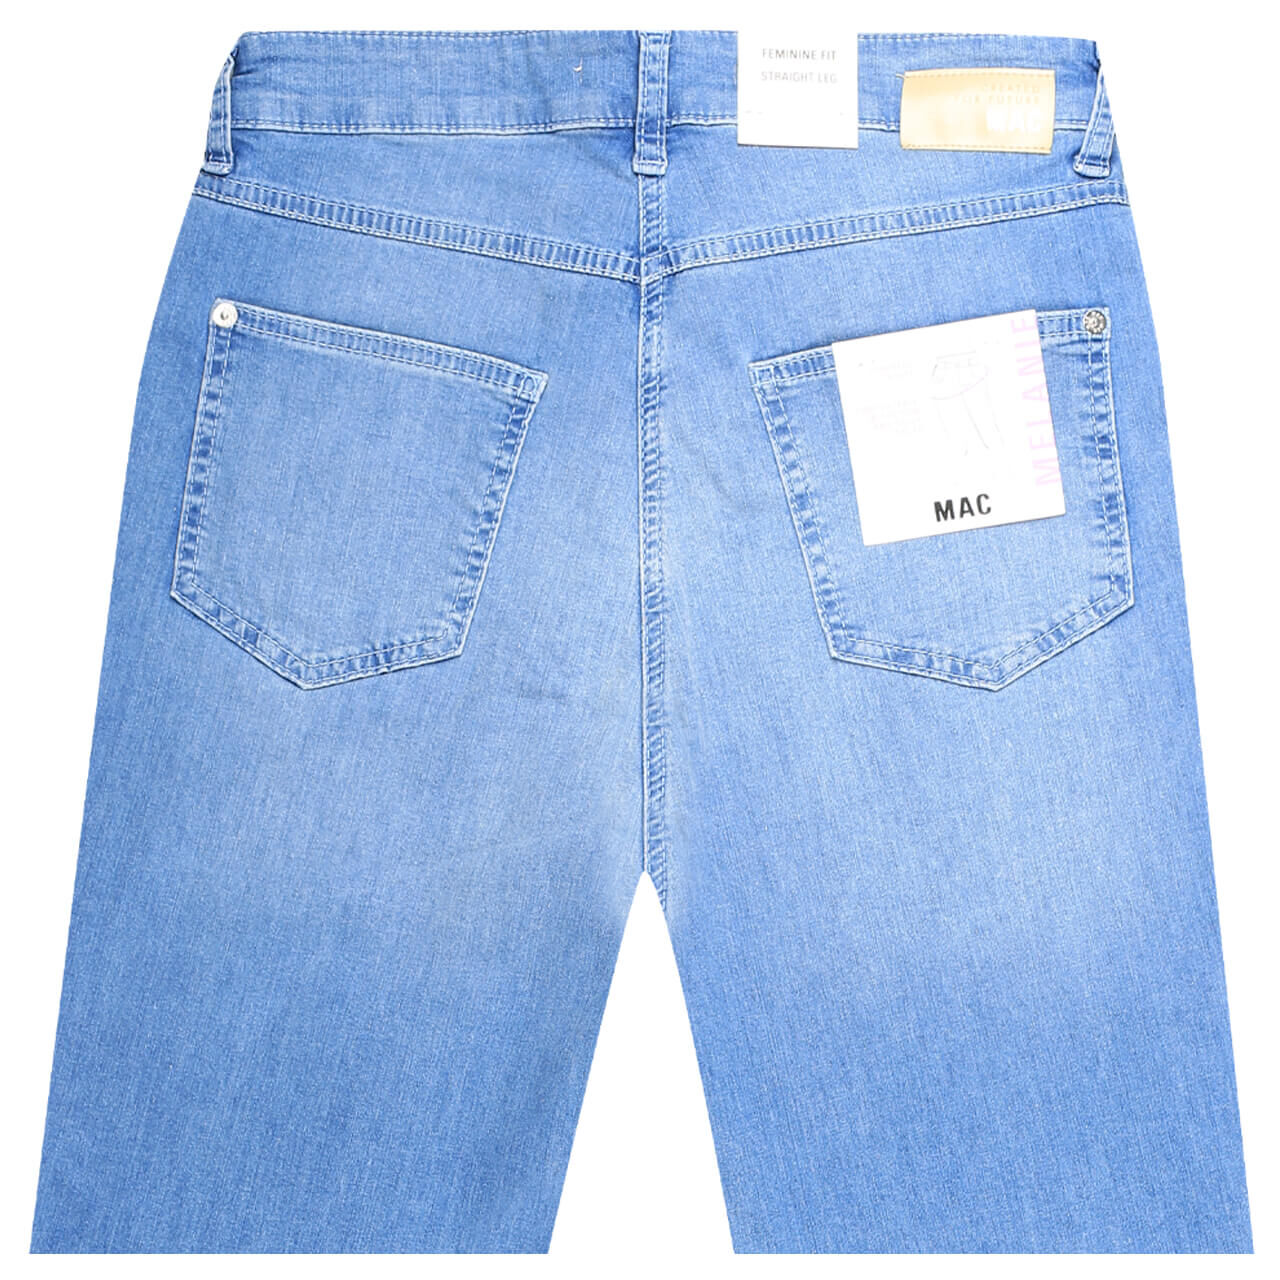 MAC Jeans Melanie für Damen in Hellblau, FarbNr.: D499